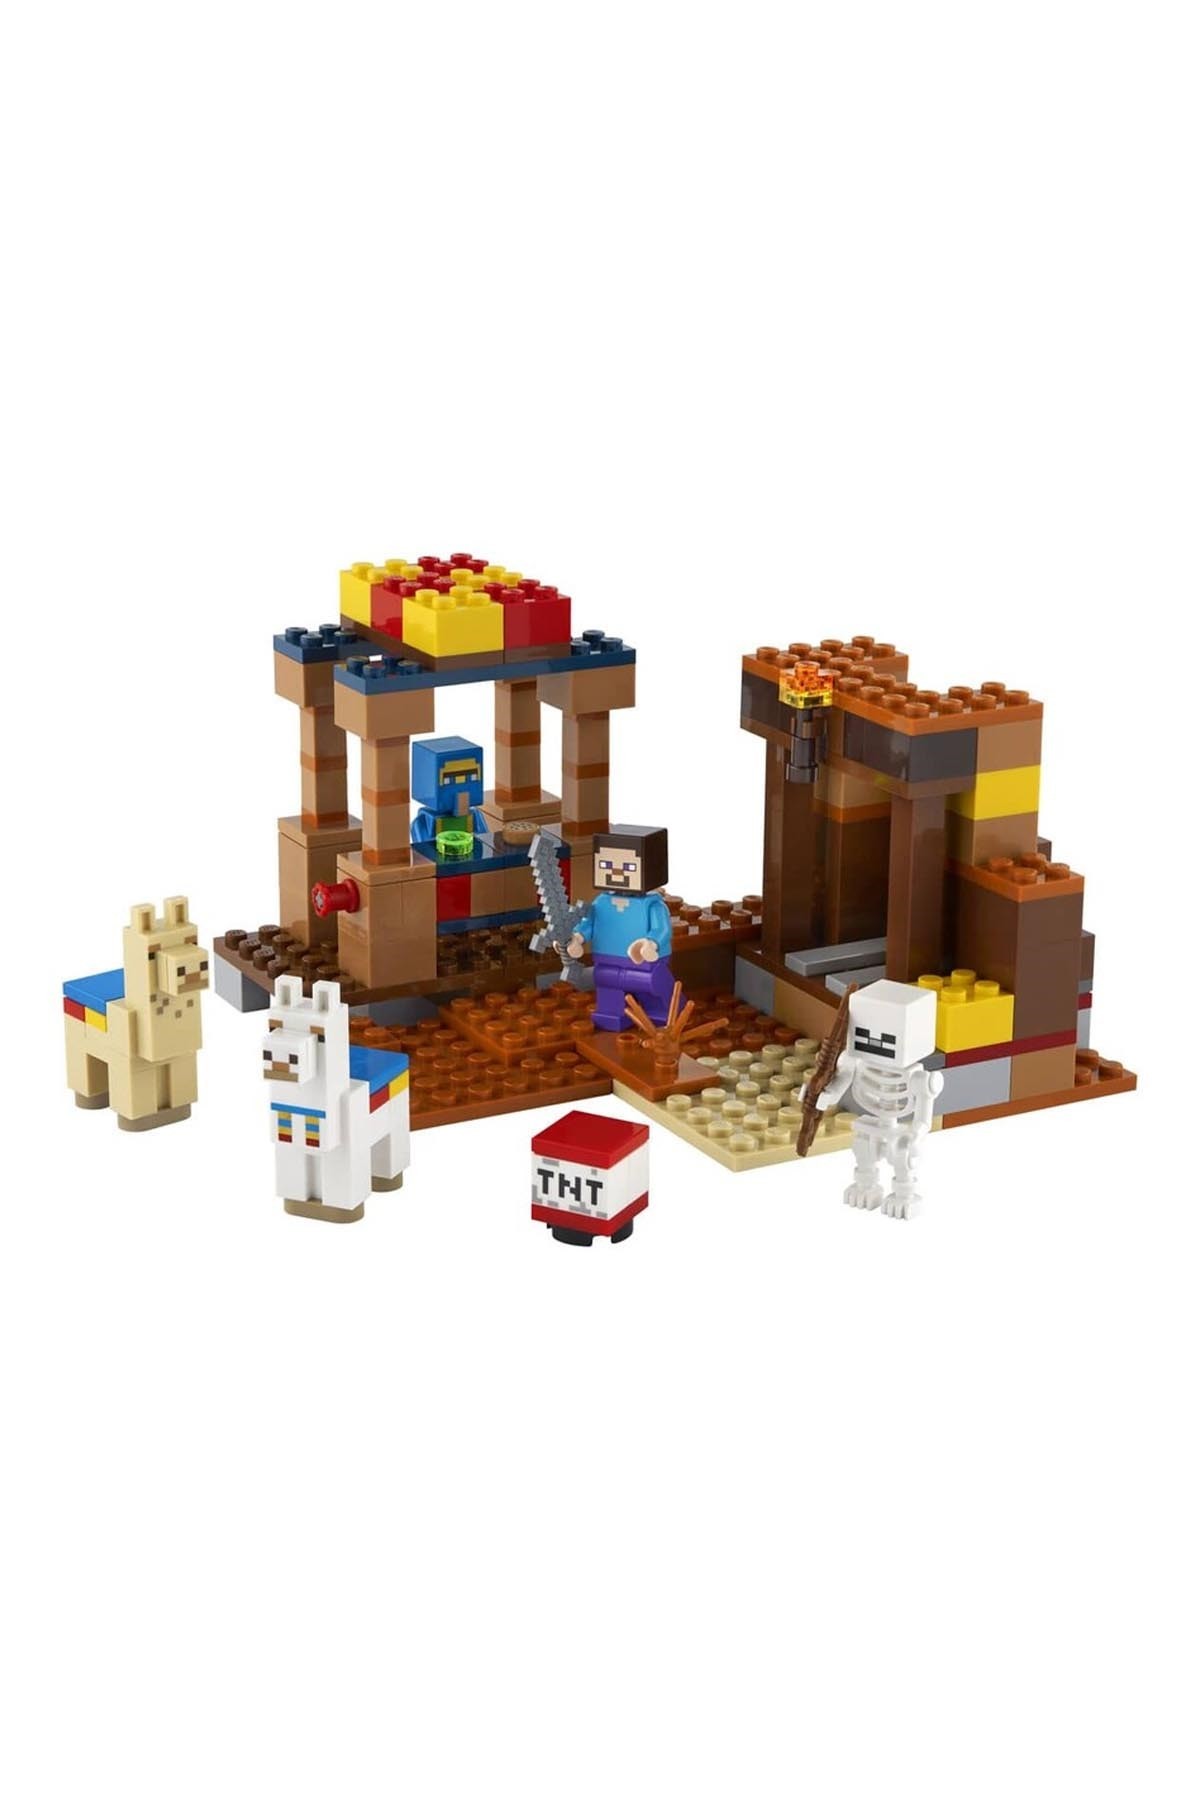 Lego Minecraft Ticaret Noktası 21167